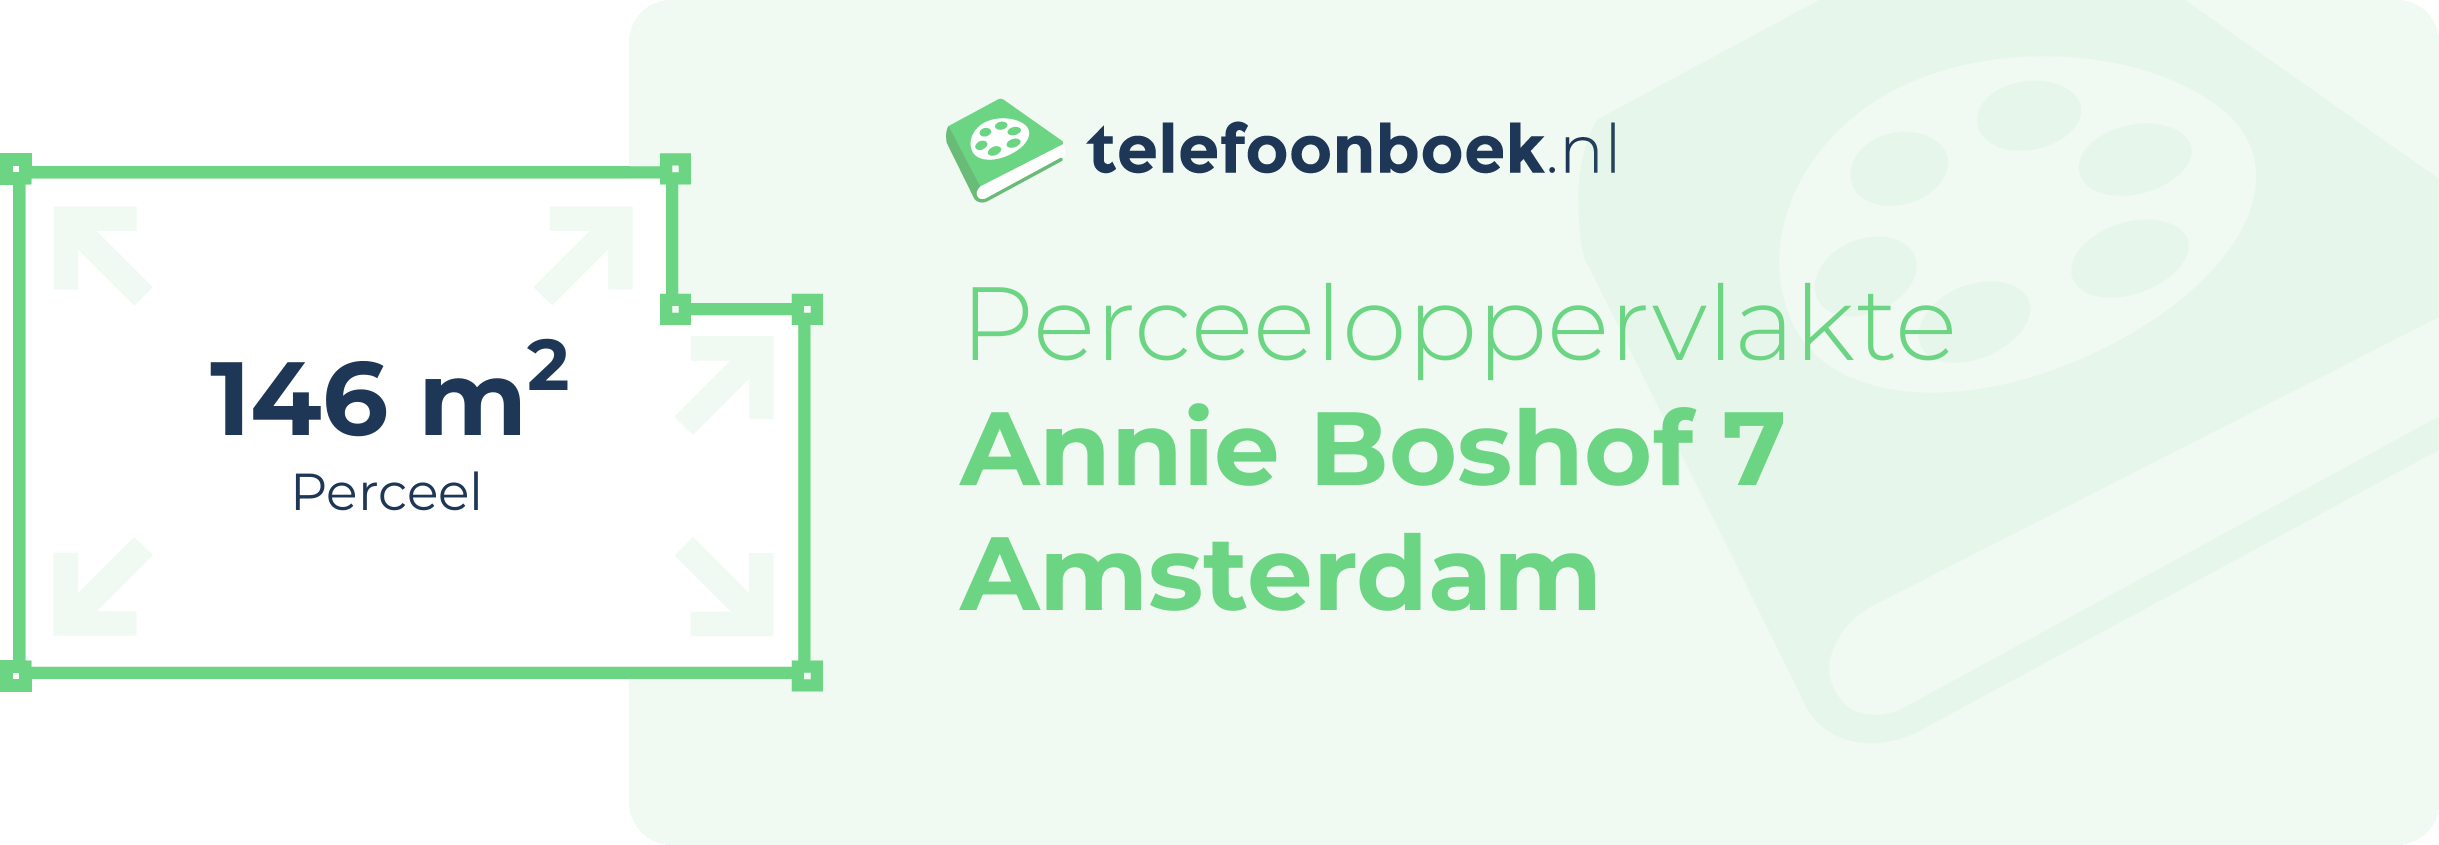 Perceeloppervlakte Annie Boshof 7 Amsterdam